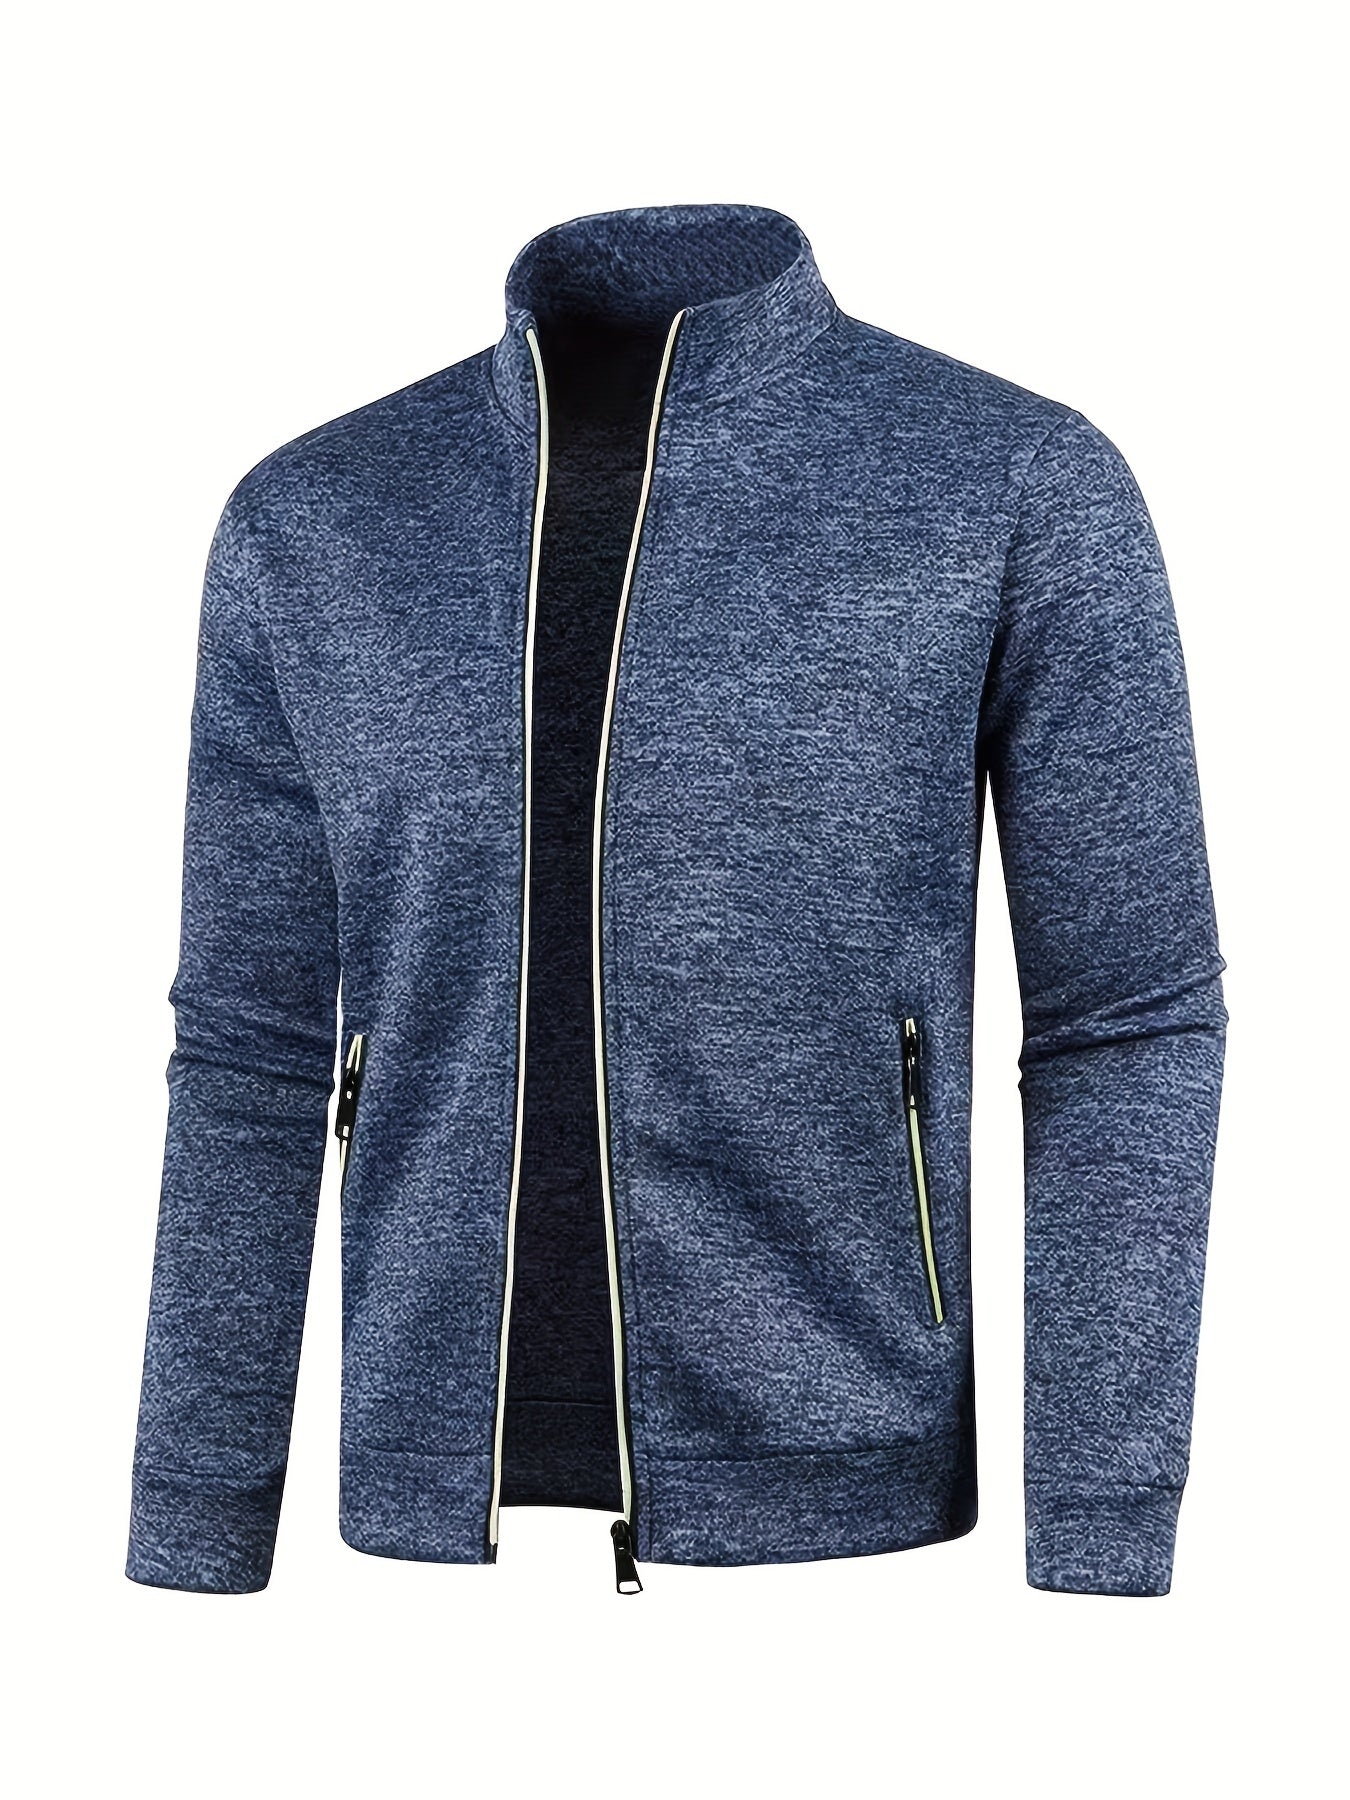 Warm Stand Collar Fleece Jacket, Men's Casual Comfortable Zip Up Zipper Pockets Knitted Cardigan For Fall Winter, Men's Bottoms